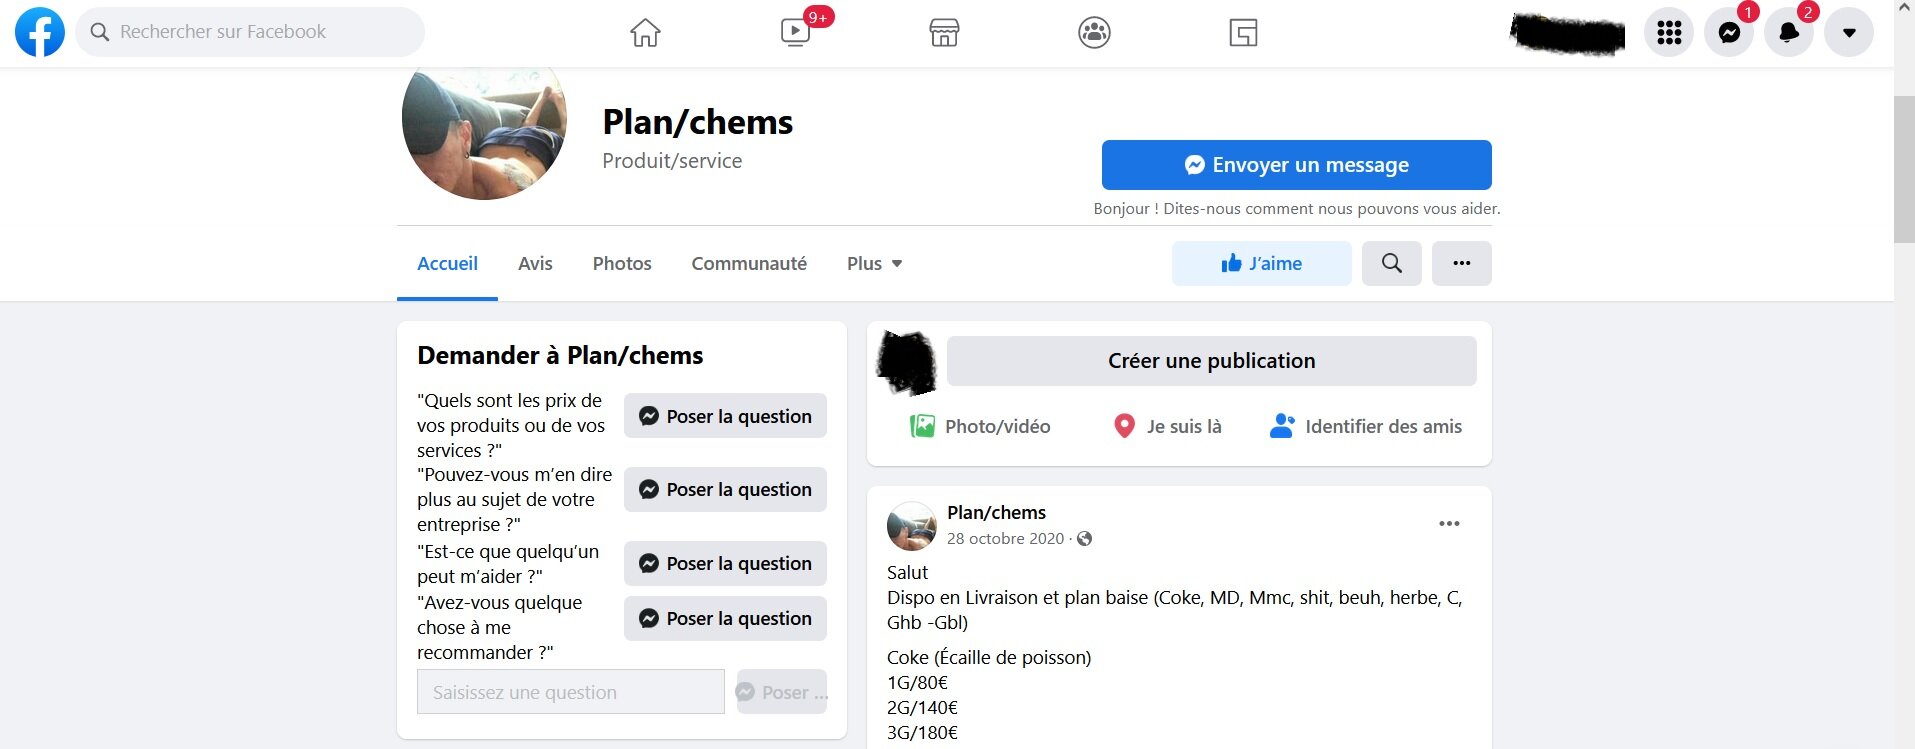 plan chemsex Lyon Facebook